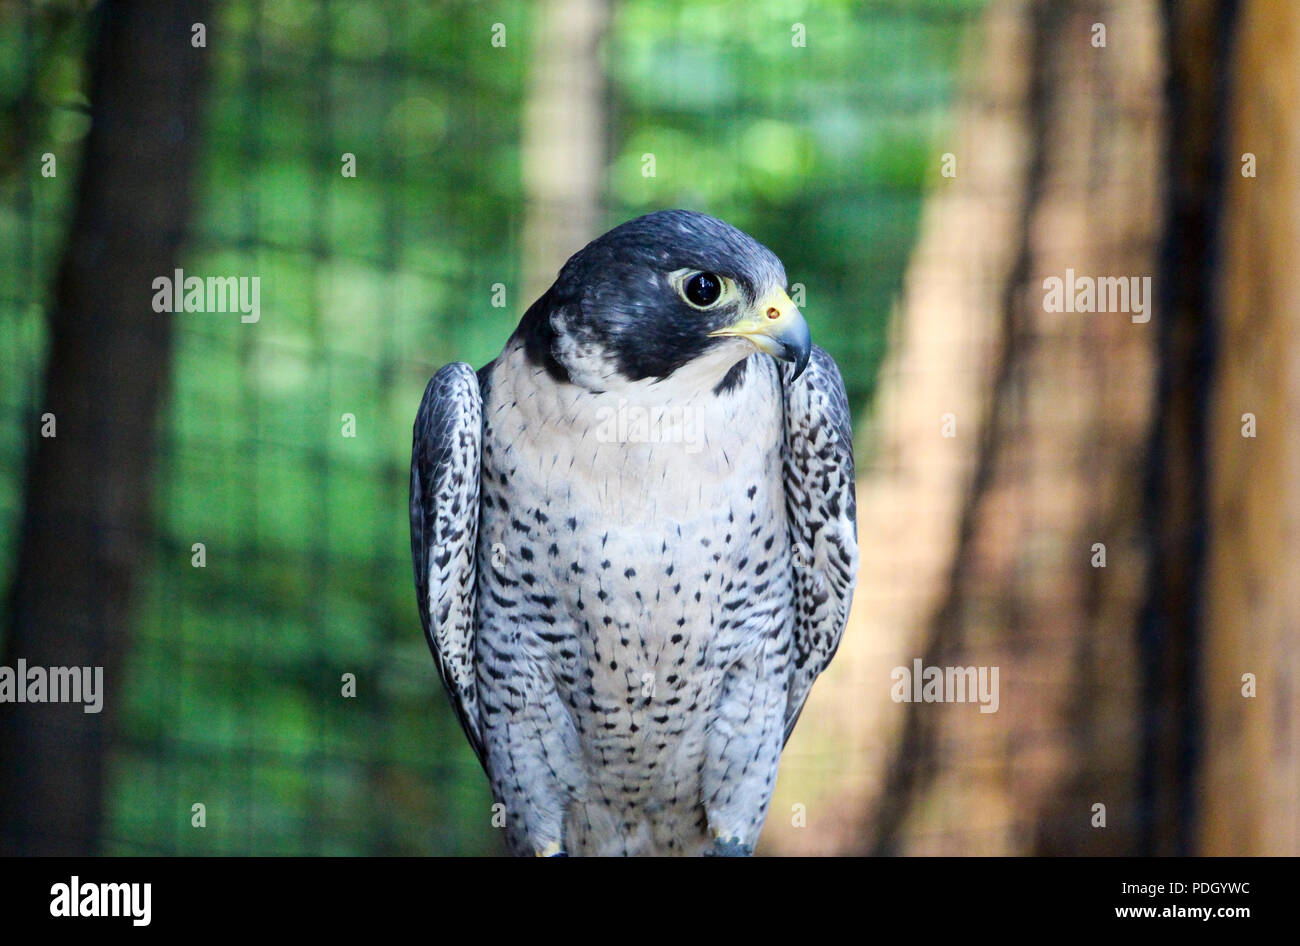 Beautiful closeup of an eye of Peregrine Falcon Stock Photo